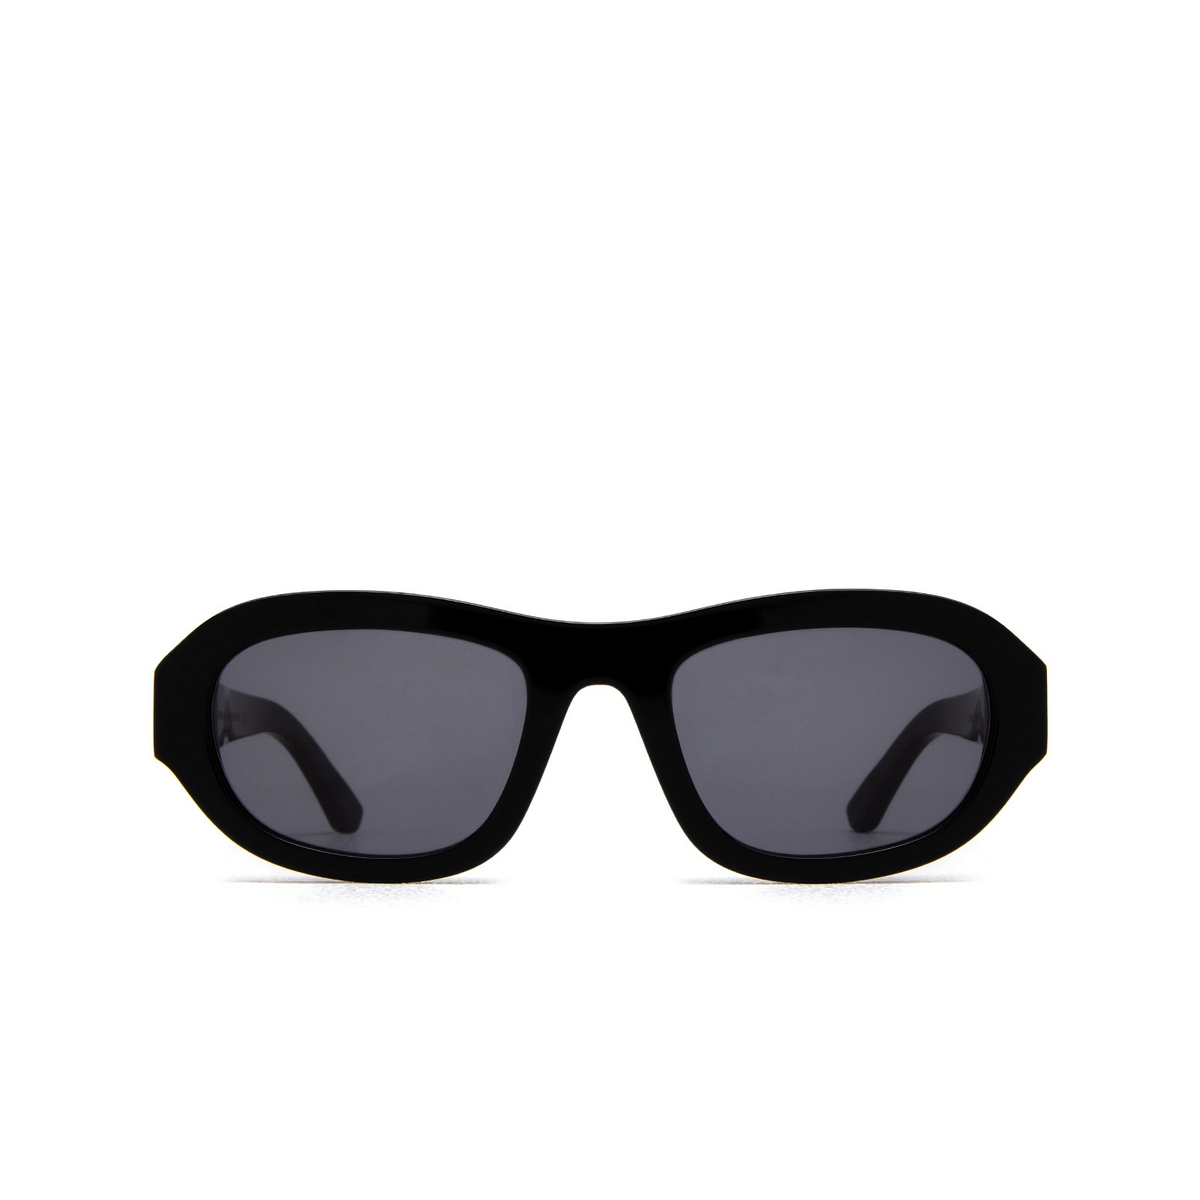 Huma LEE Sunglasses 06 Black - front view